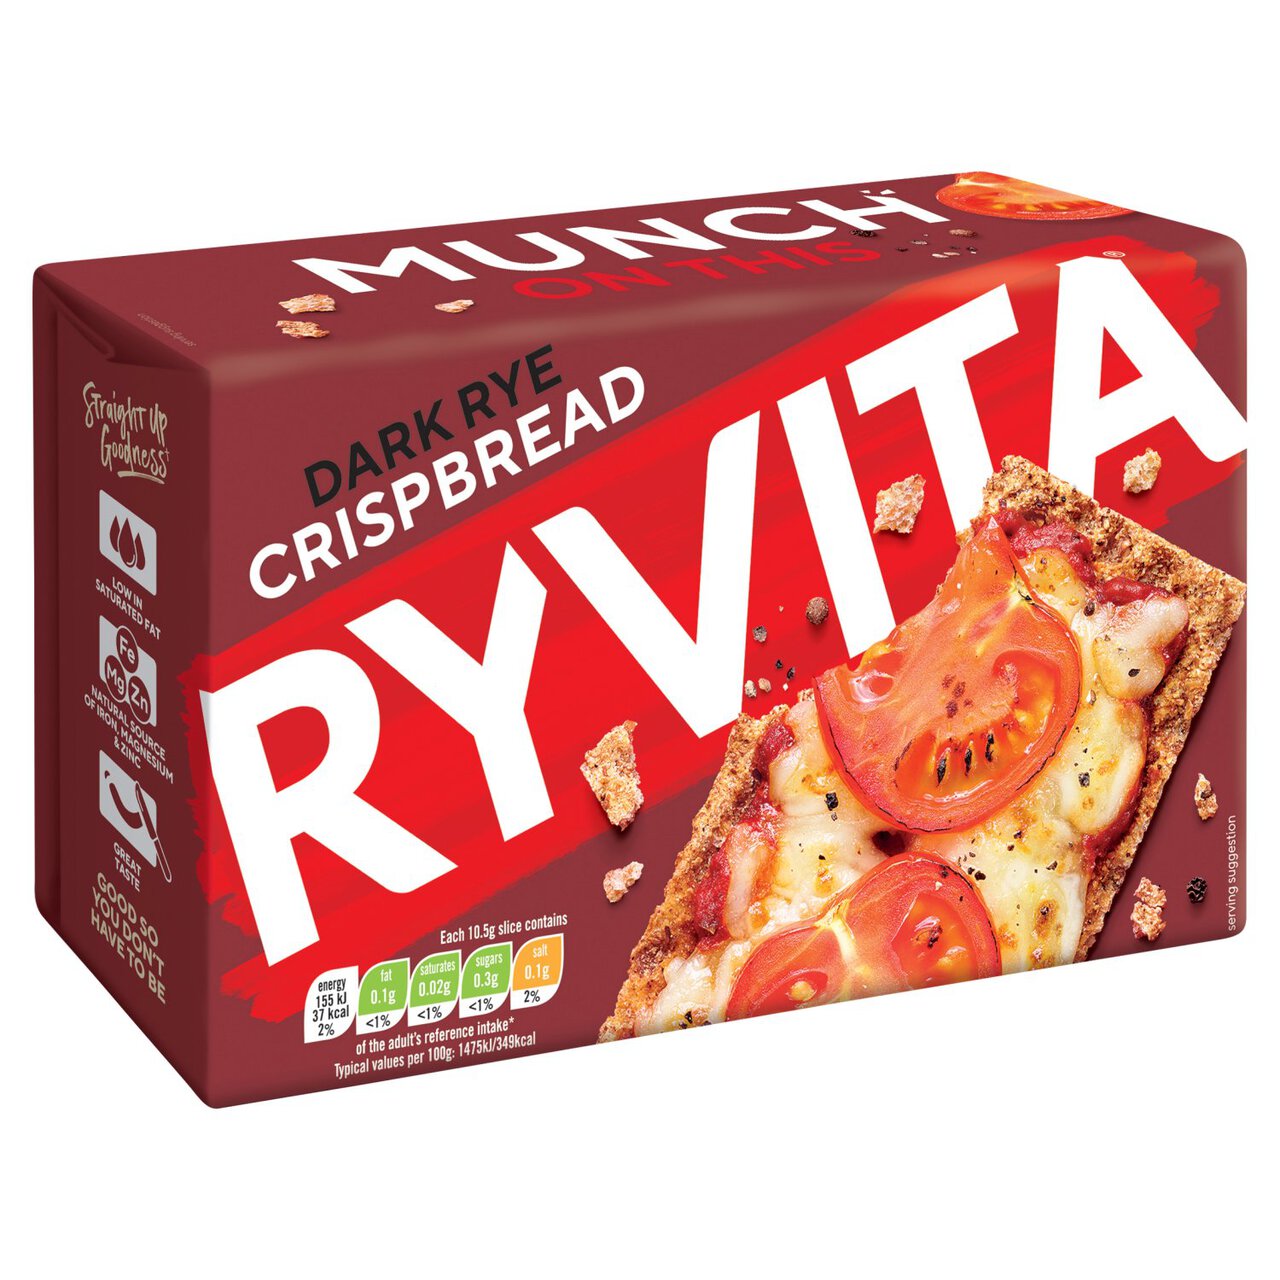 Ryvita Crispbread Dark Rye 250g